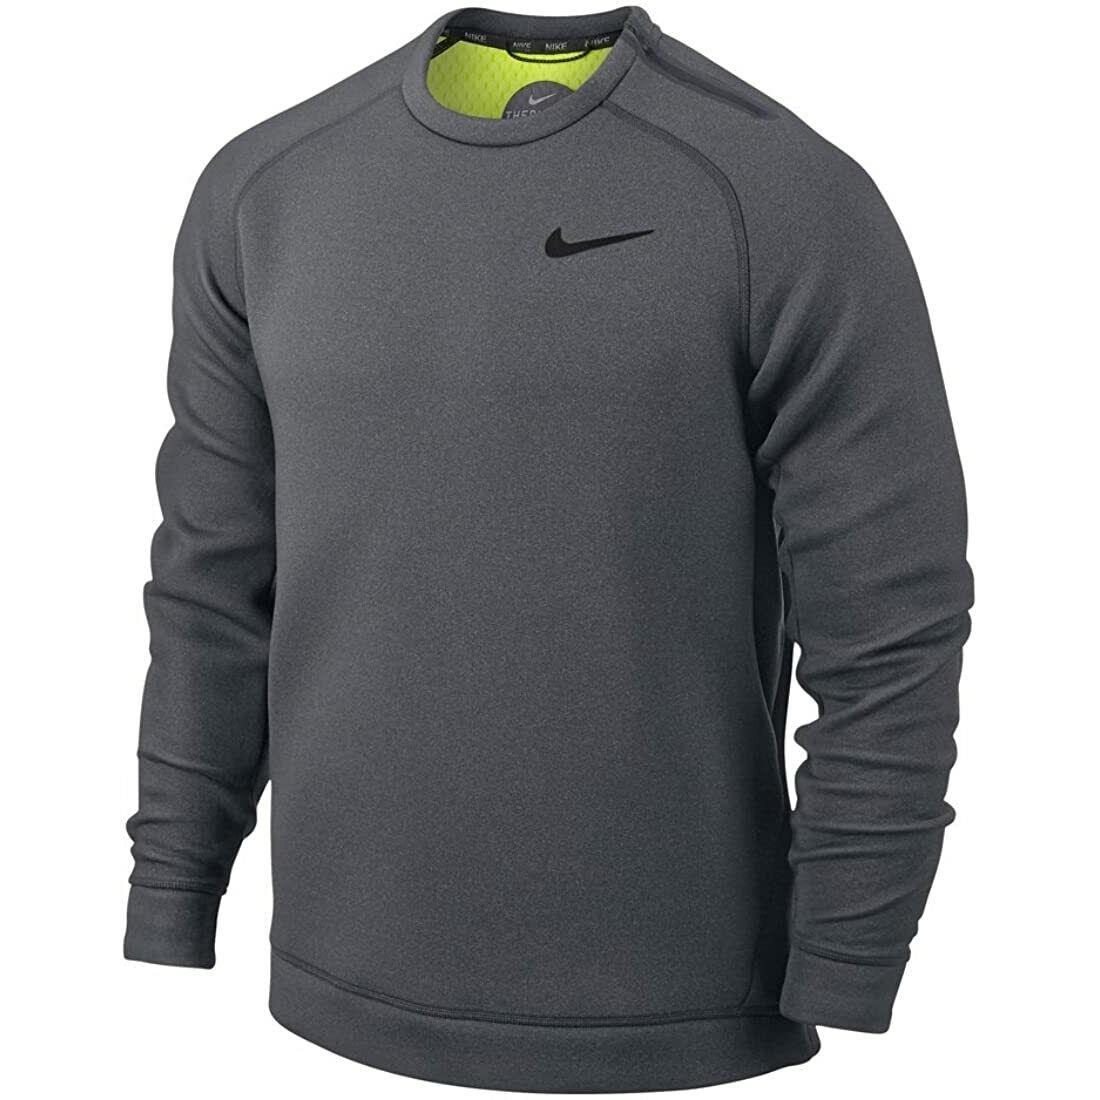 Nike Mens Golf Tech Therma Sphere Crew Sweat Shirt Top Charcoal Grey S